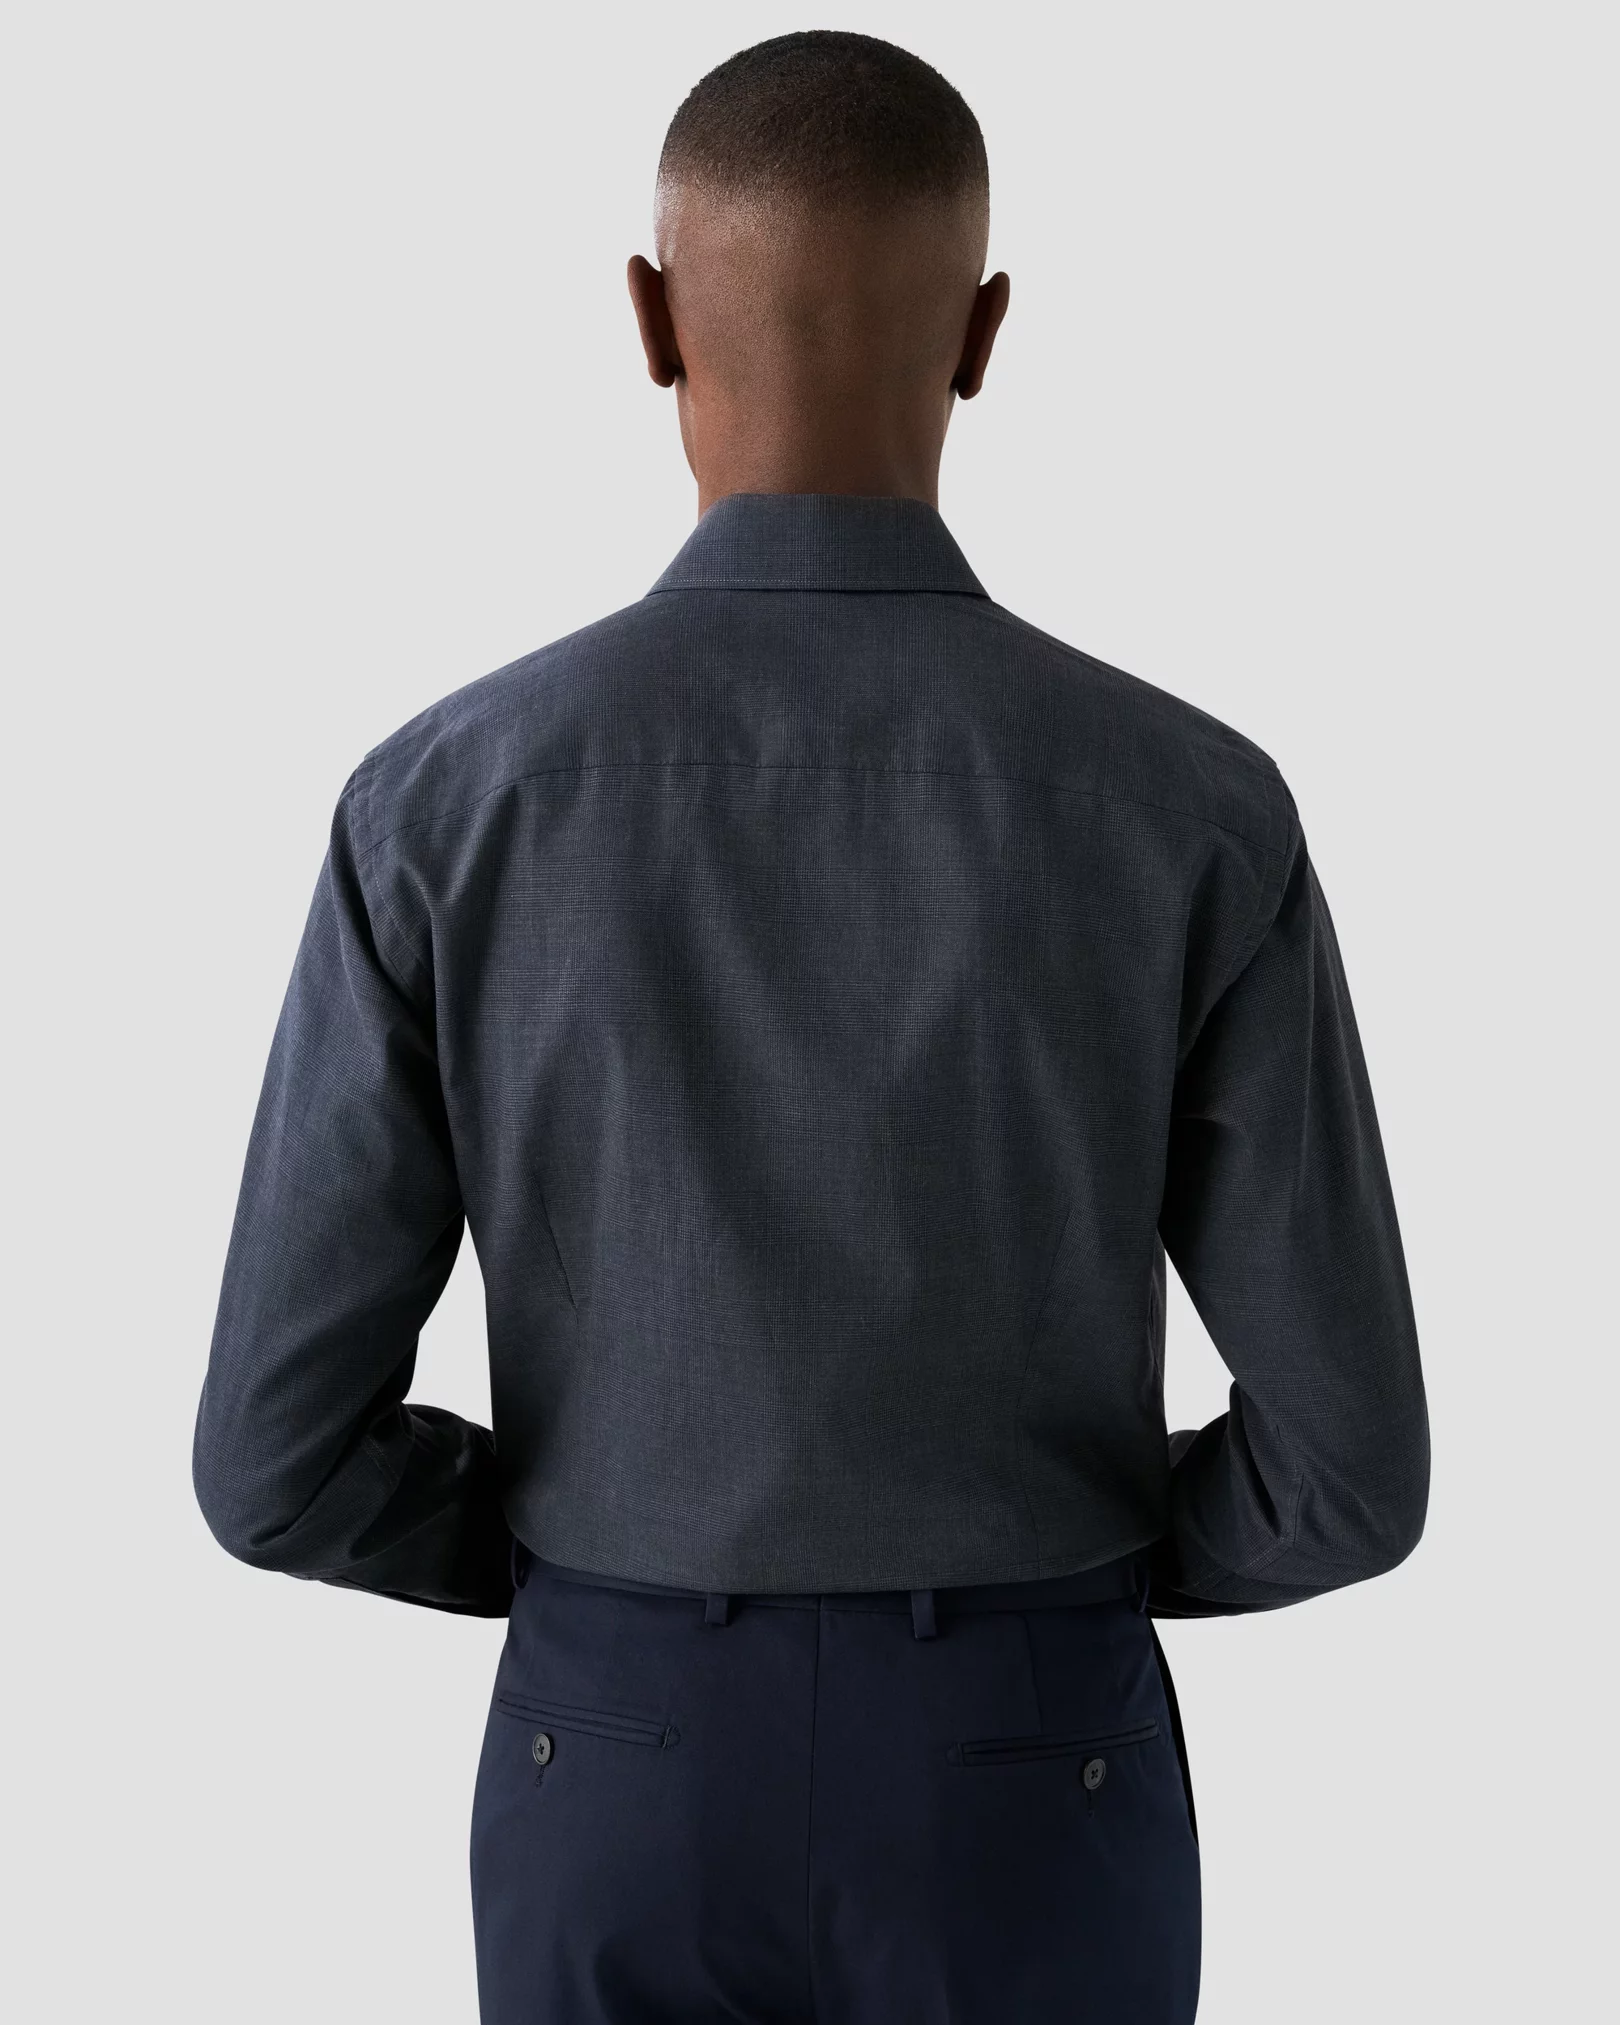 Eton - navy blue flanell widespread shirt